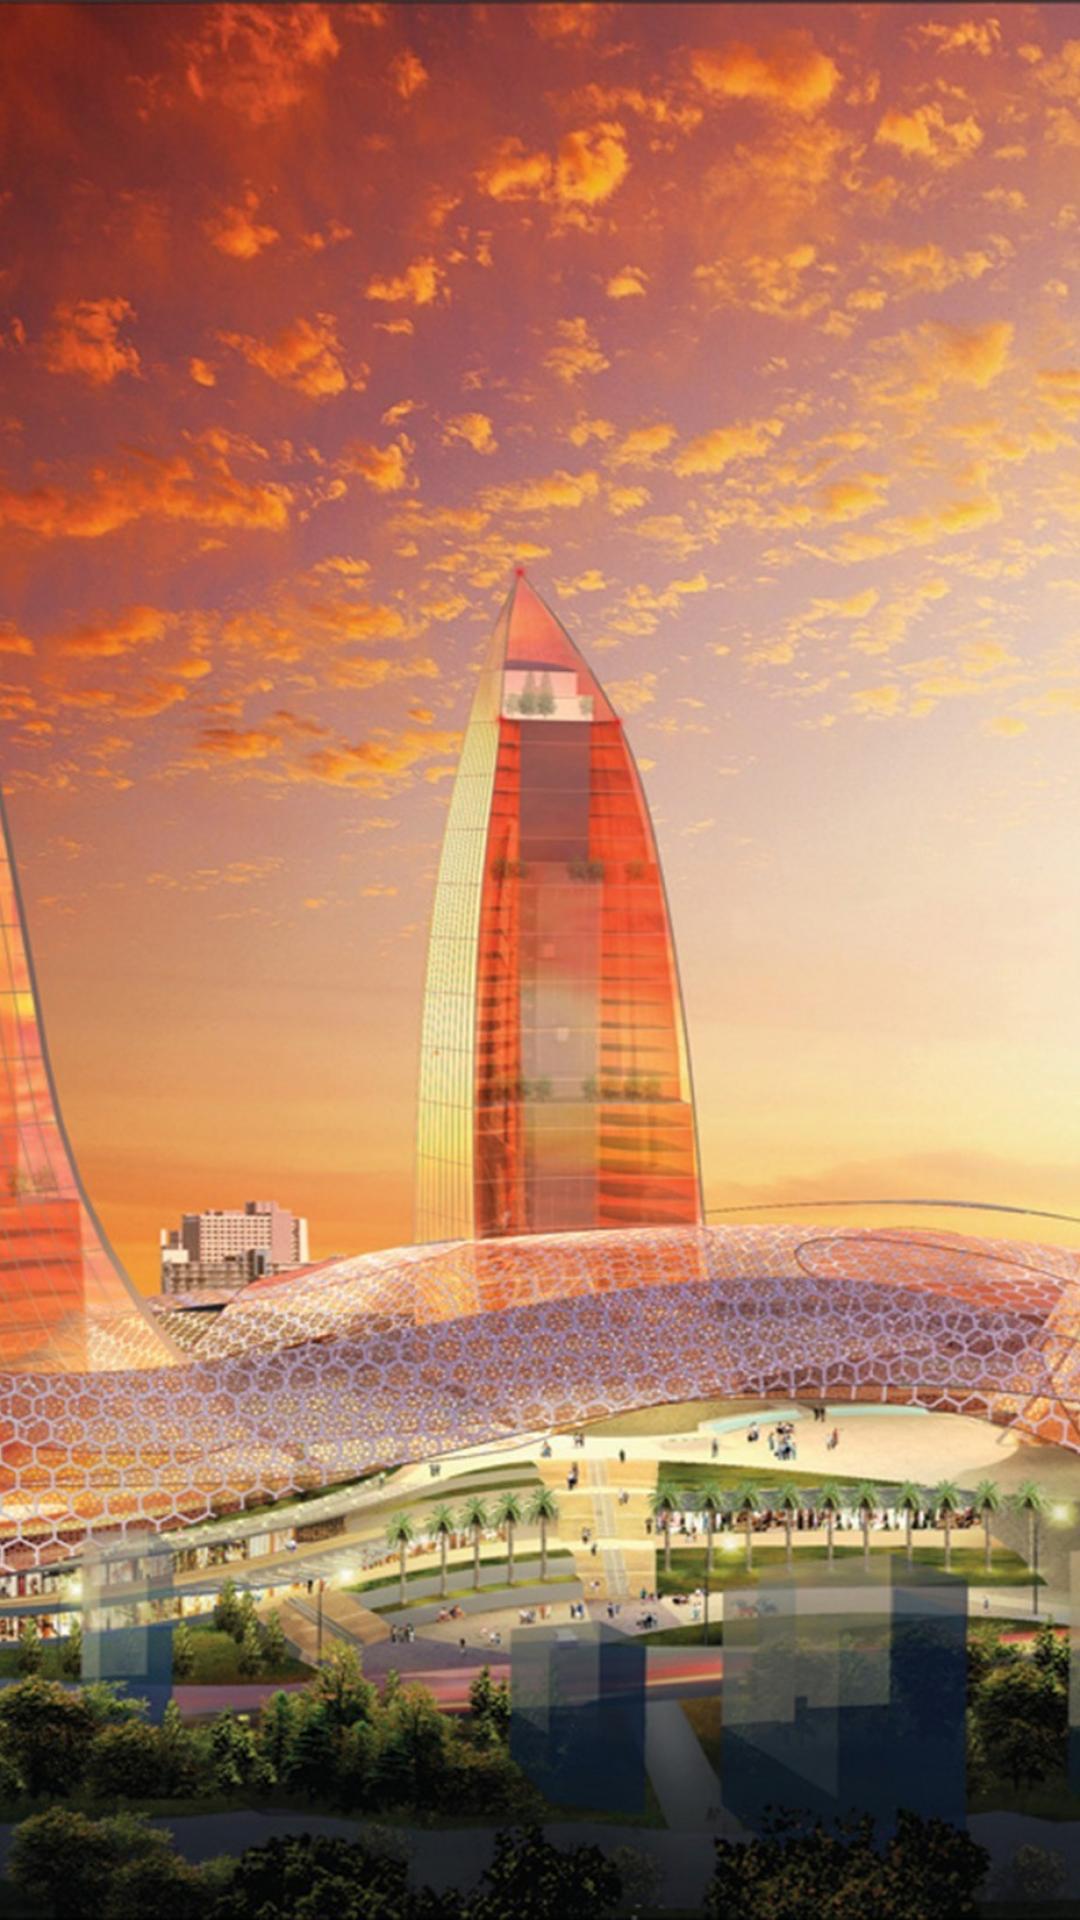 Futuristic architecture design buildings flame azerbaijan baku